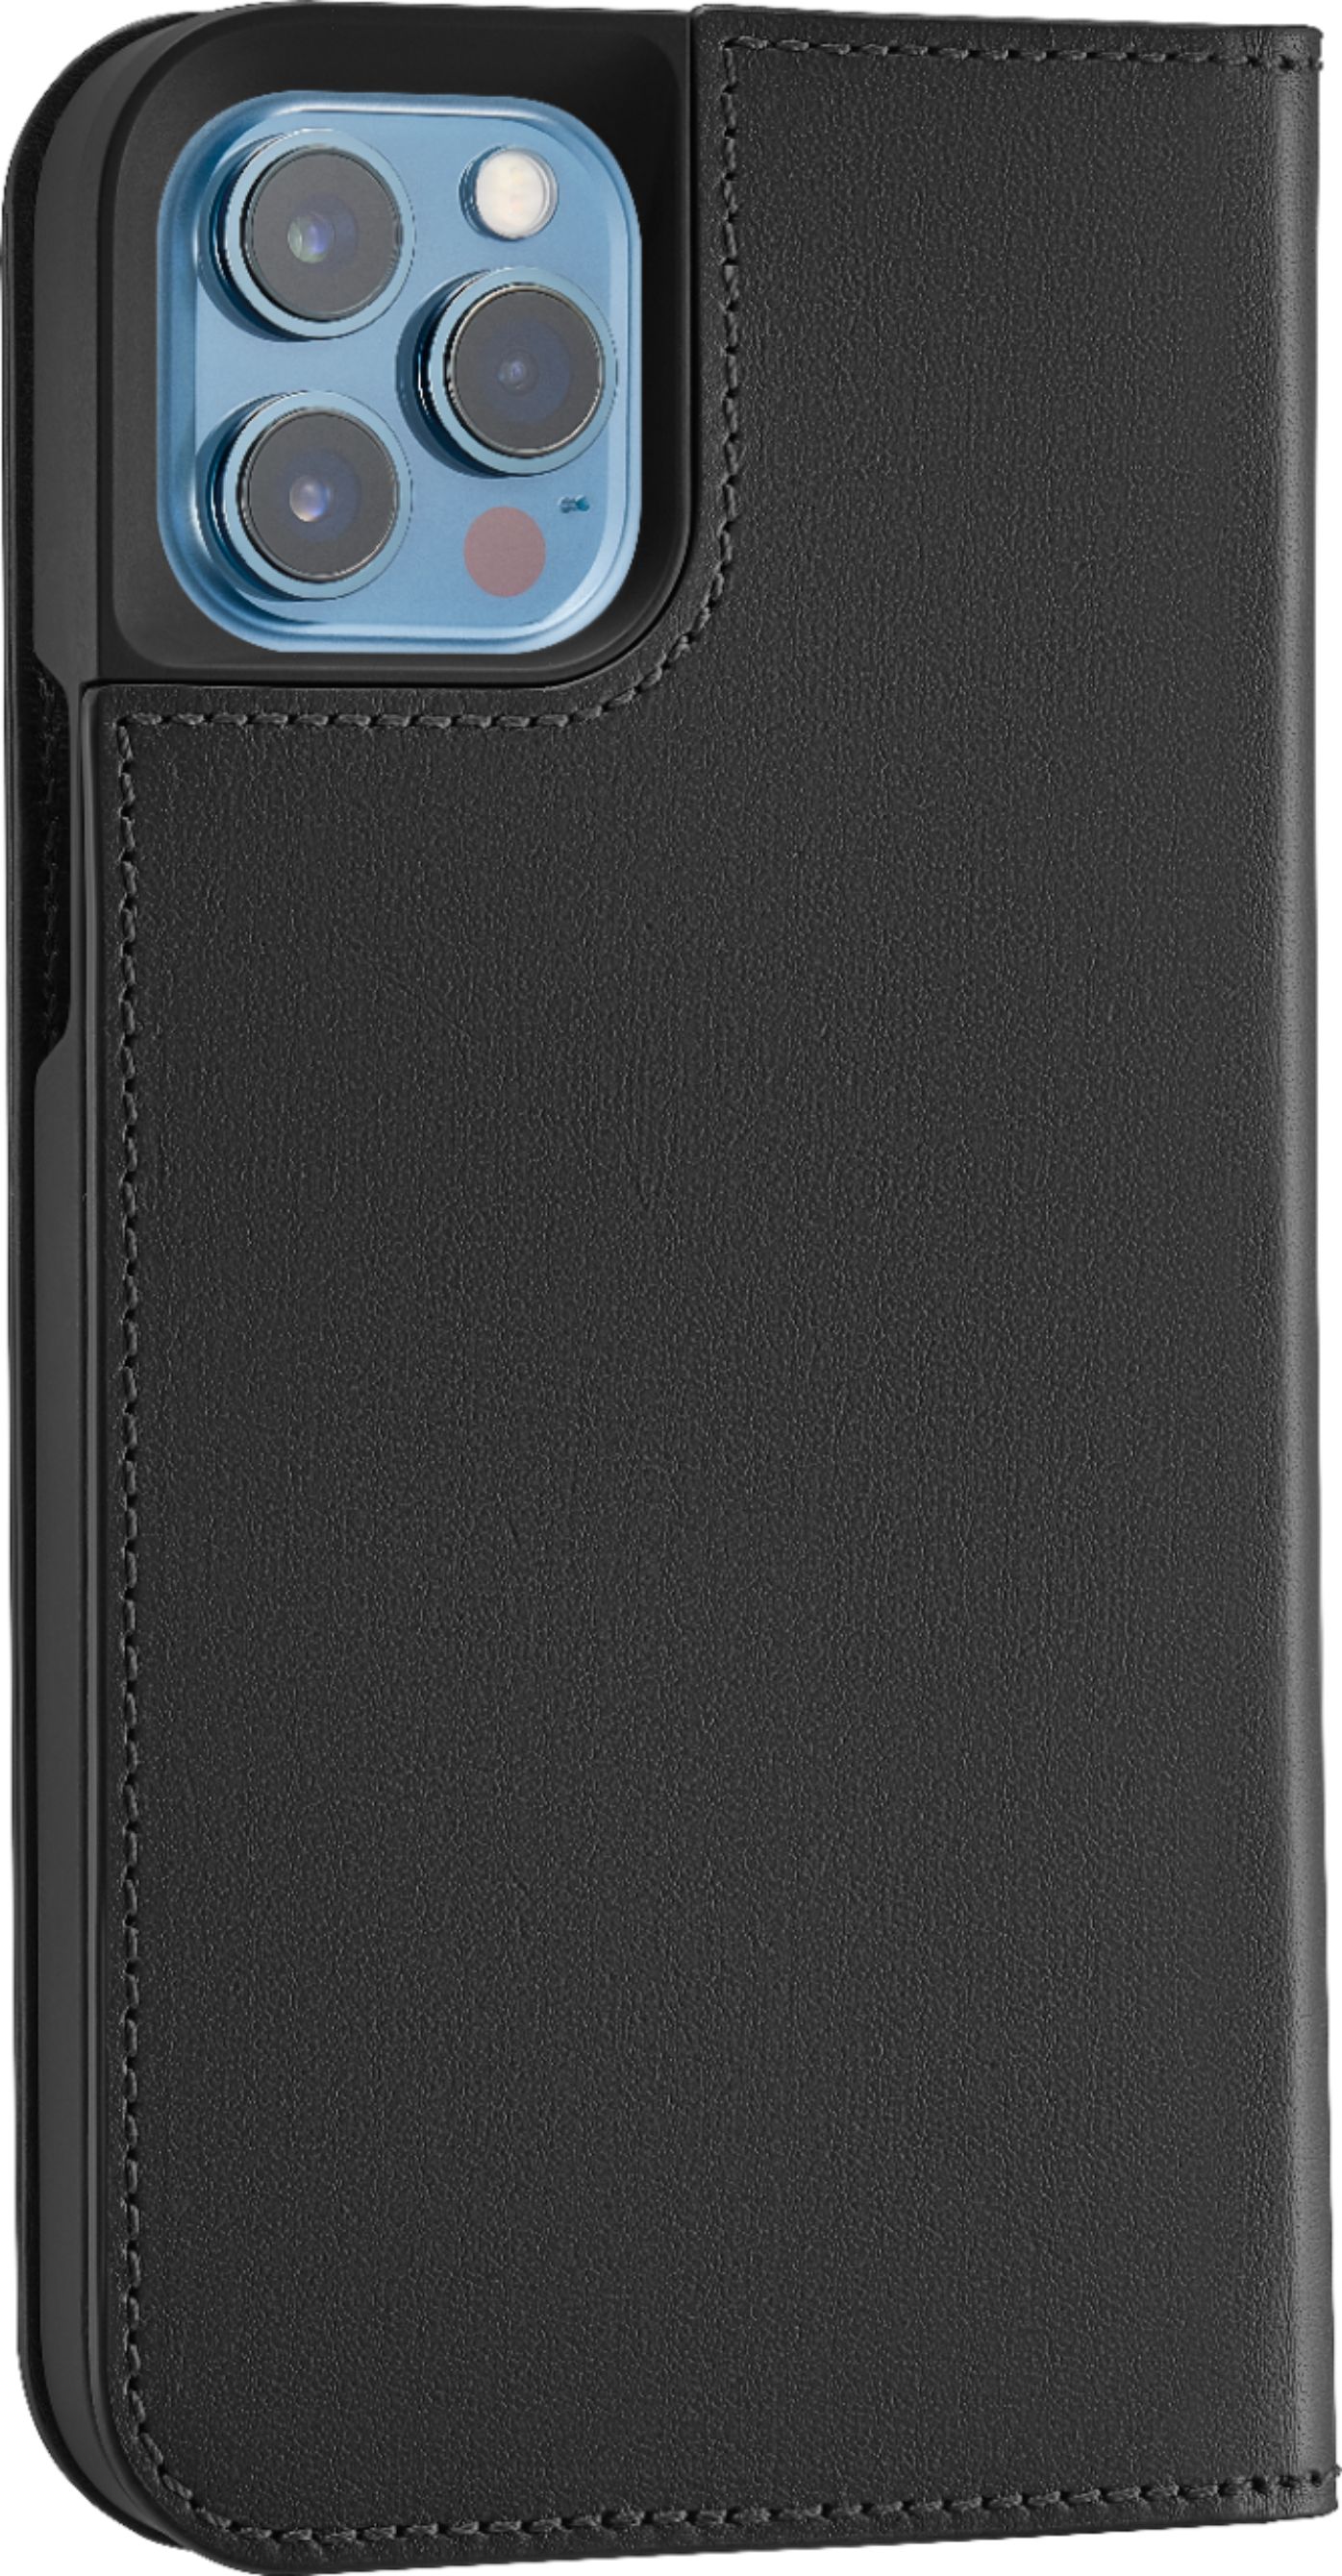 iPhone 12 Pro Max Folio Wallet Case - Park Ave